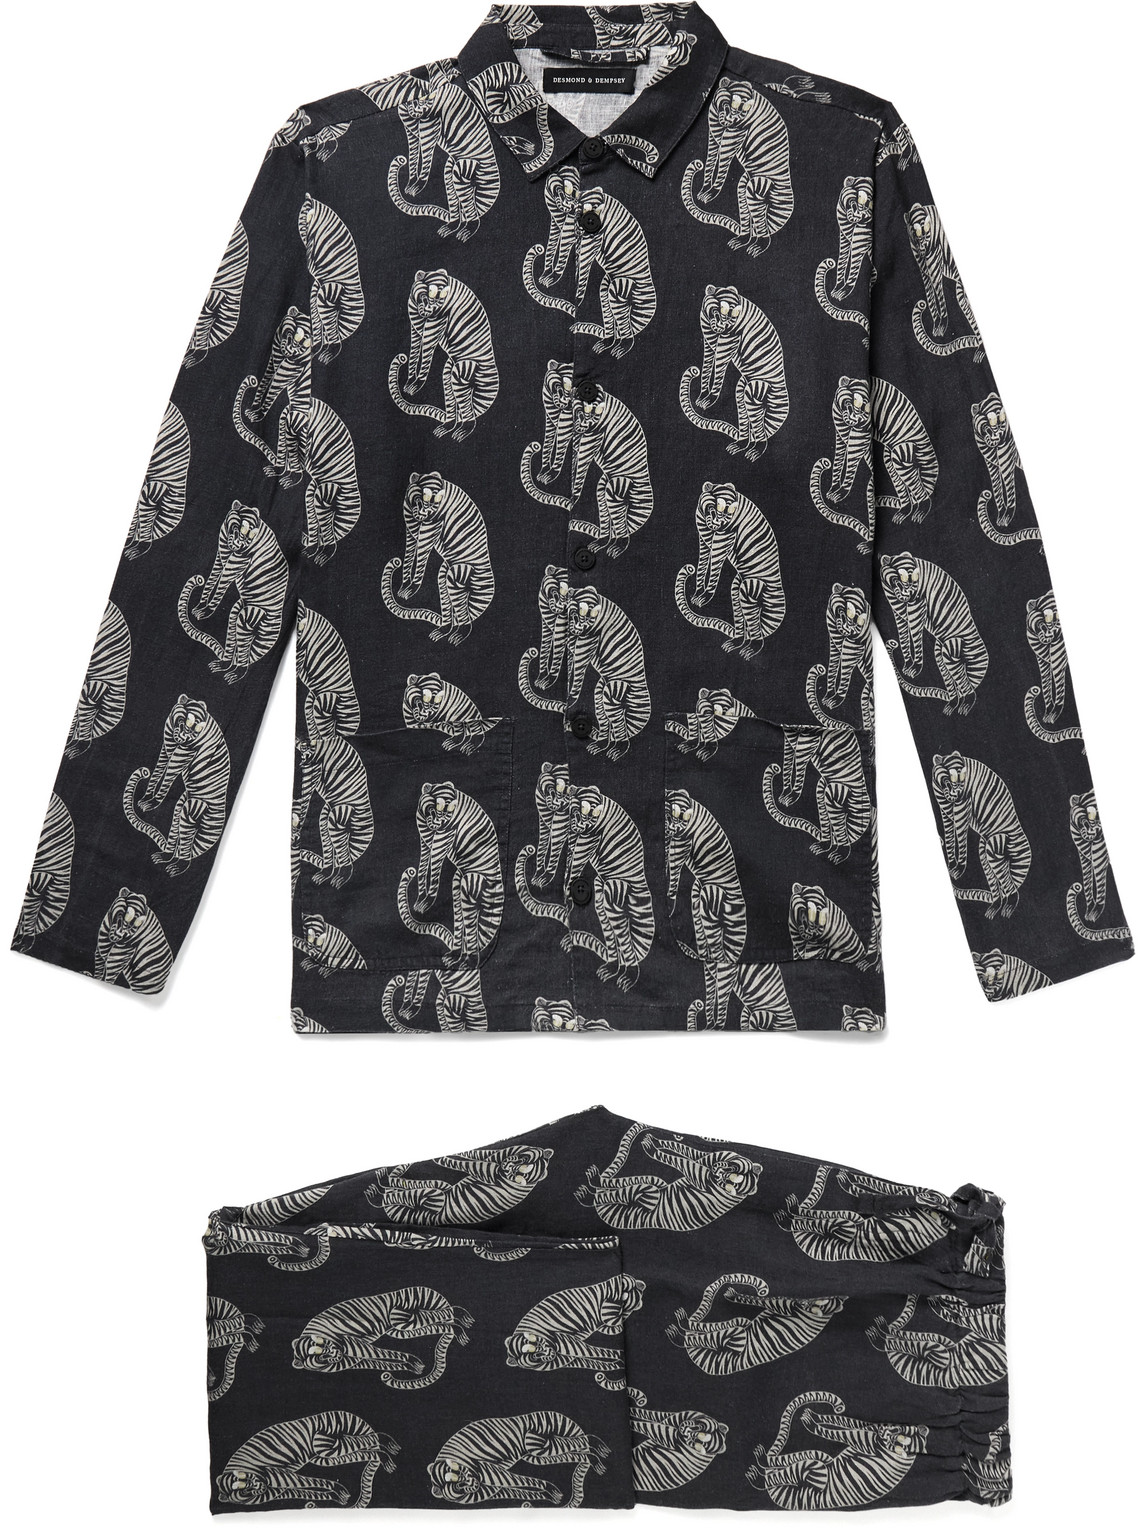 Desmond & Dempsey Printed Linen Pyjama Set In Black